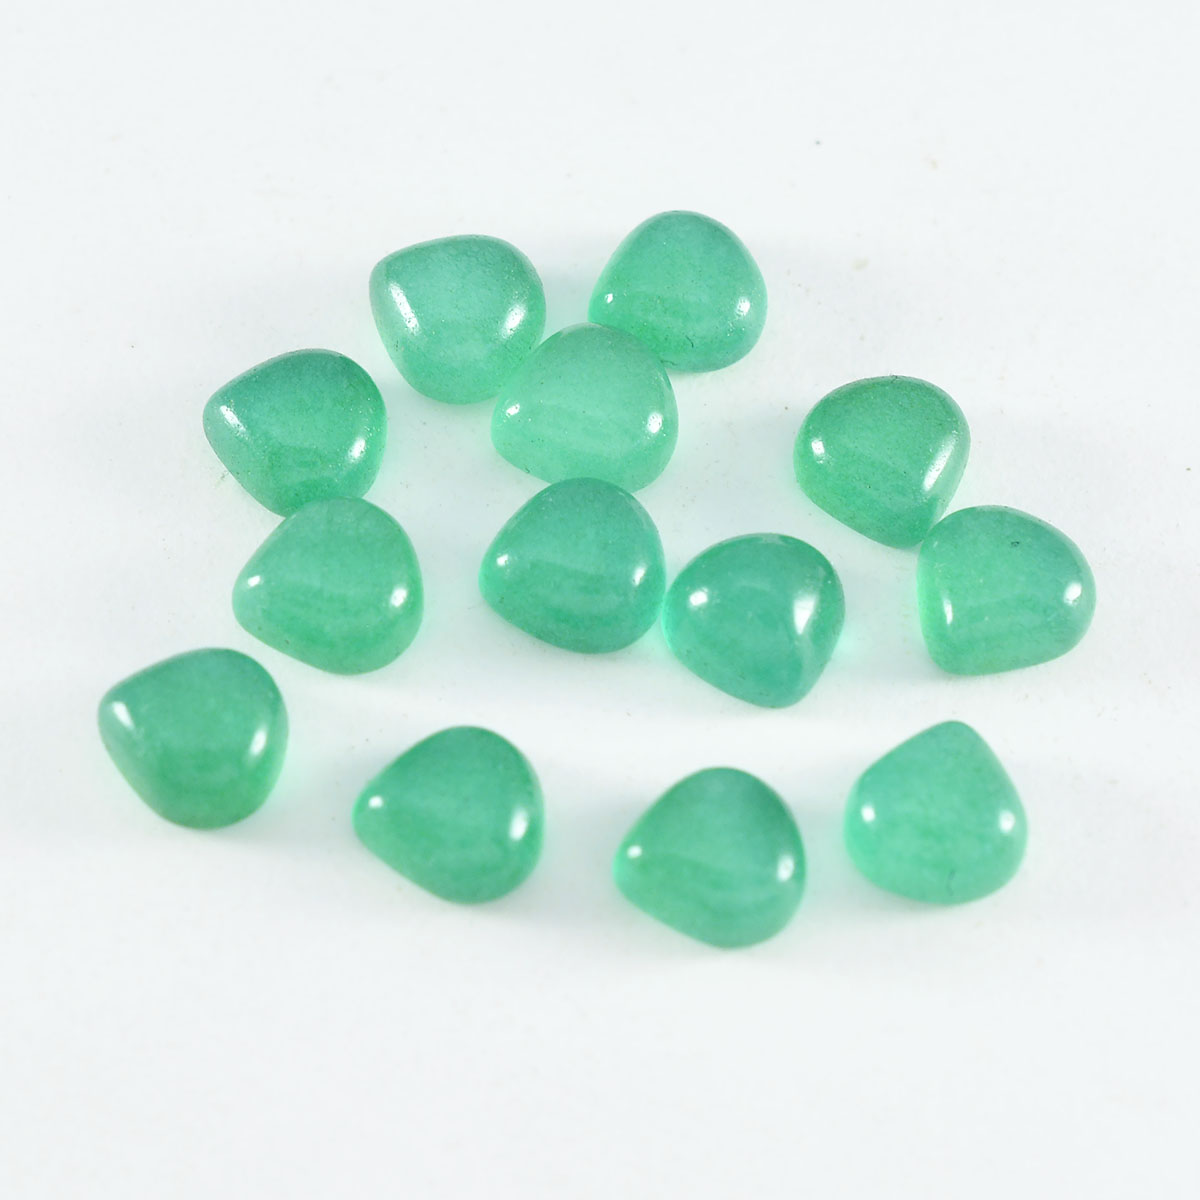 Riyogems 1PC groene onyx cabochon 6x6 mm hartvorm mooie kwaliteit losse steen